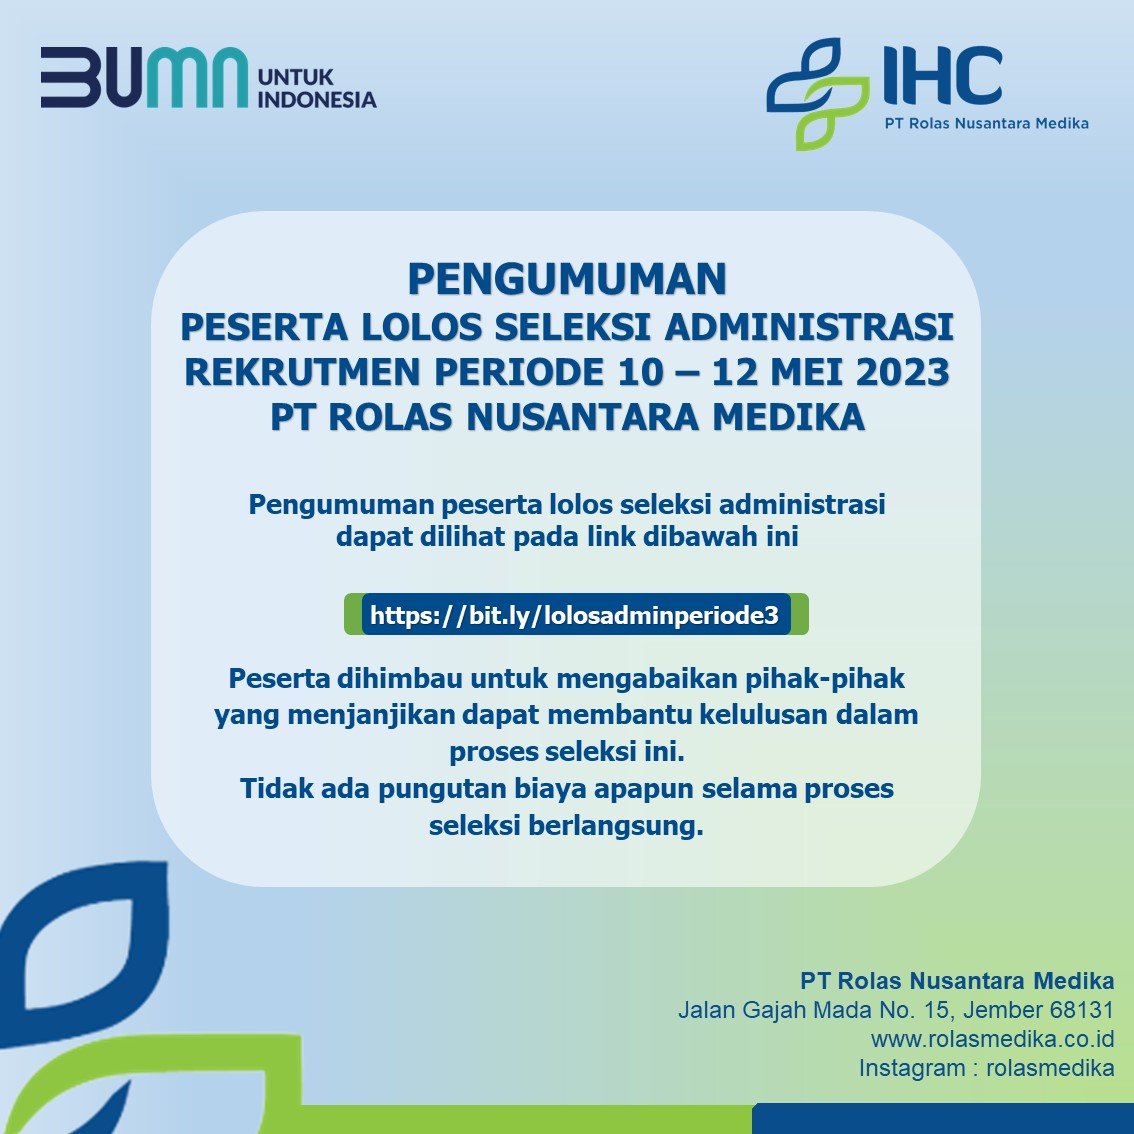 You are currently viewing Pengumuman peserta lolos seleksi administrasi rekrutmen periode 10 – 12 Mei 2023 PT Rolas Nusantara Medika